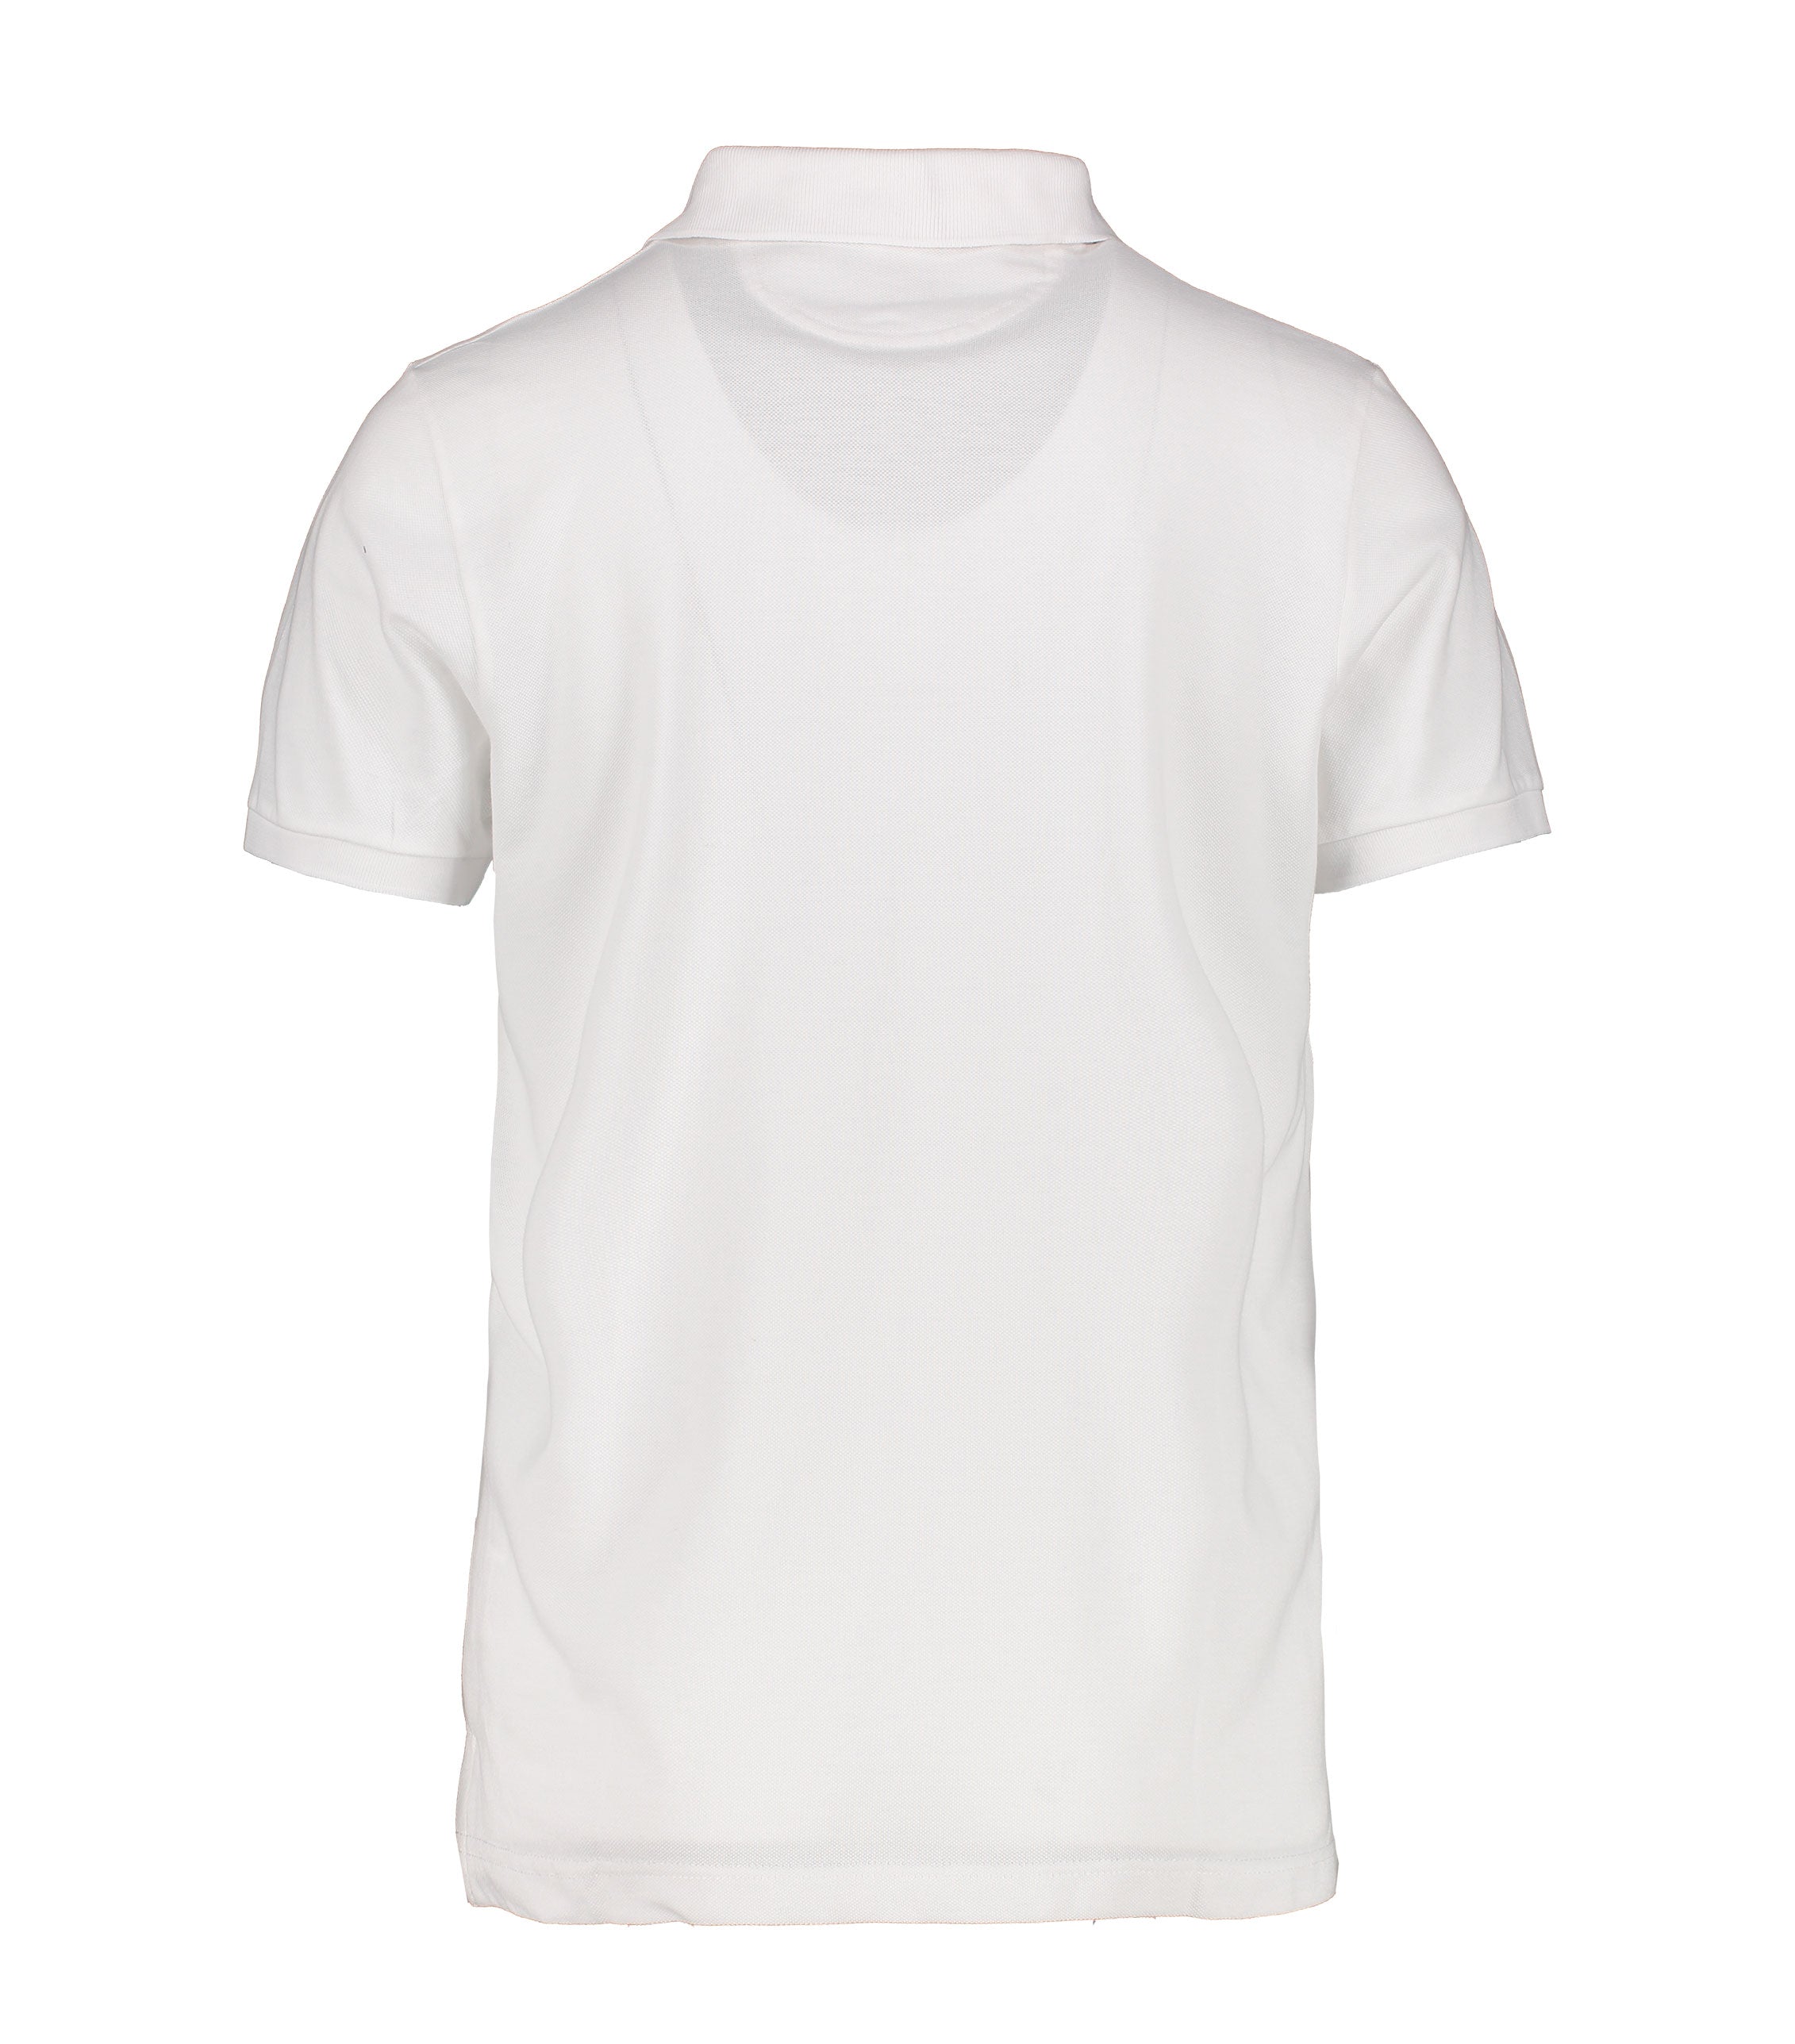 Pernfors White Polo Shirt